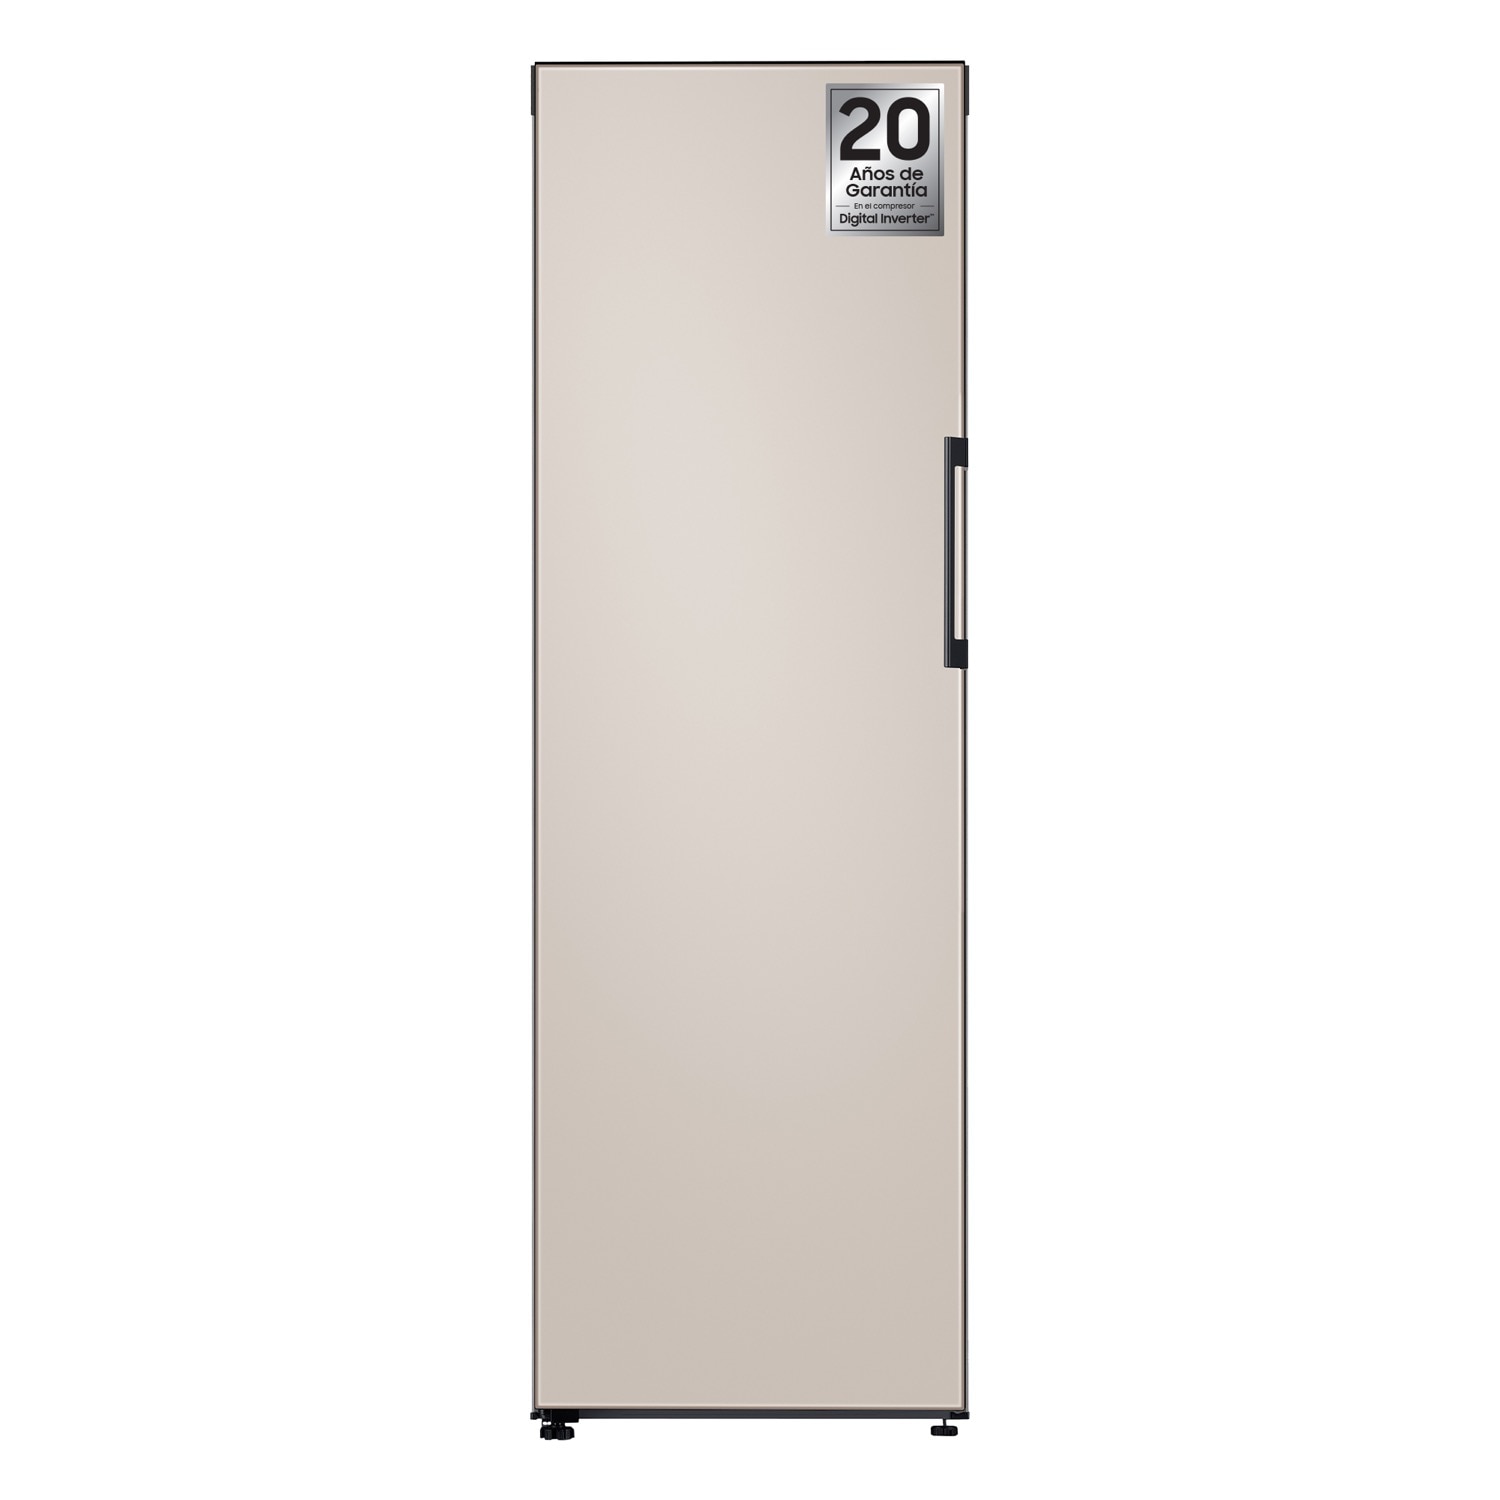 Congelador Samsung Bespoke twin satin beige rz32a748539es 1853x688x595mm h a vertical rz32a748539ef 1 puerta 185.3x59.5 nofrost clase 323l frost libre instalacion 323 4 185 rz32a748539